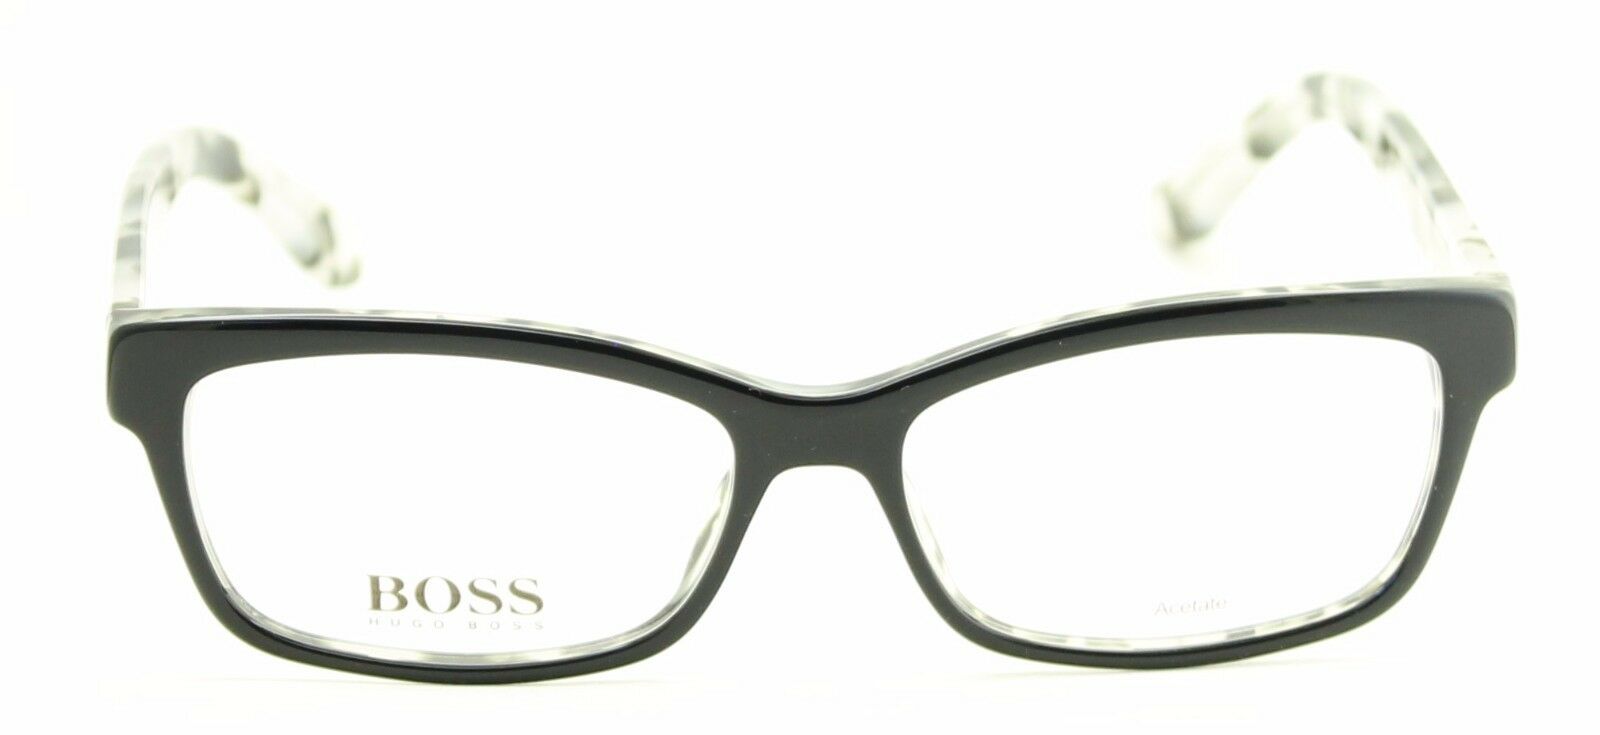 HUGO BOSS 0745 KIL 53mm Eyewear FRAMES Glasses RX Optical Eyeglasses New - Italy